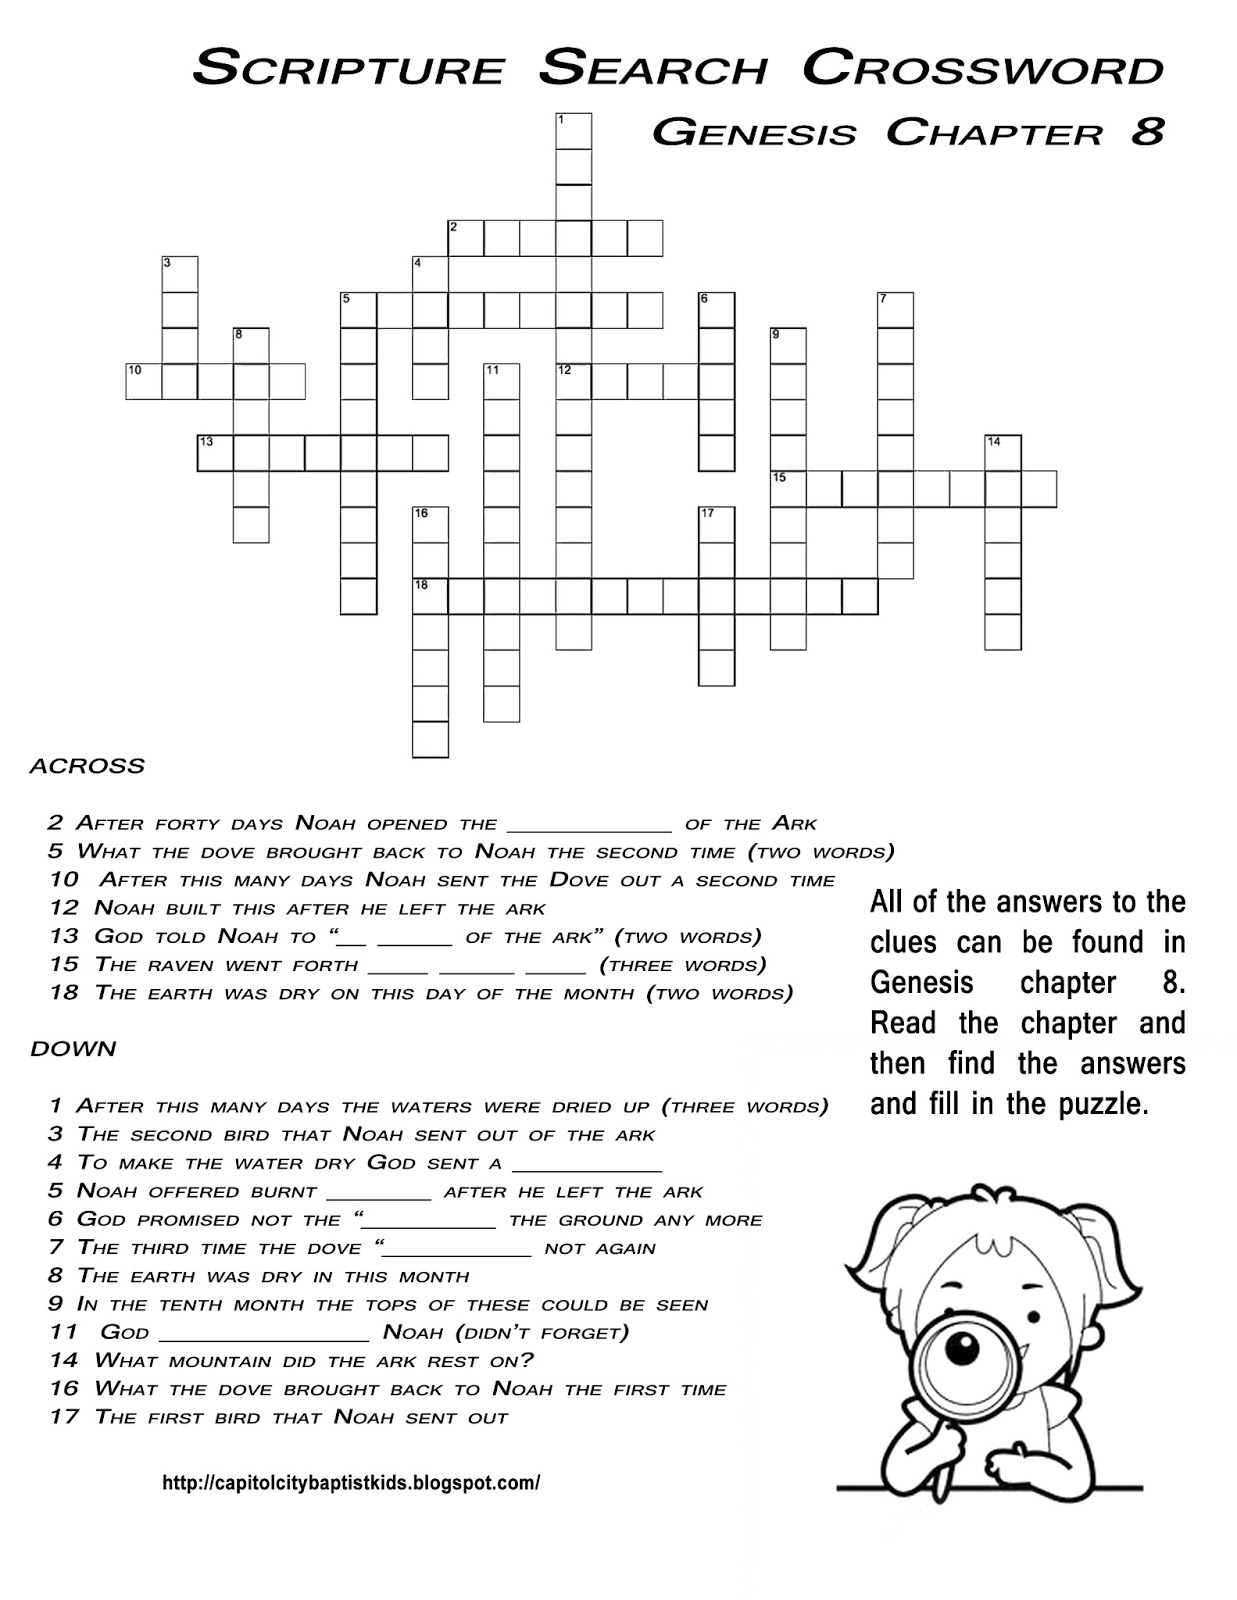 Ccbc Kids Corner: Scripture Search Crossword #3 Genesis 8 - Printable Crossword Puzzles #3